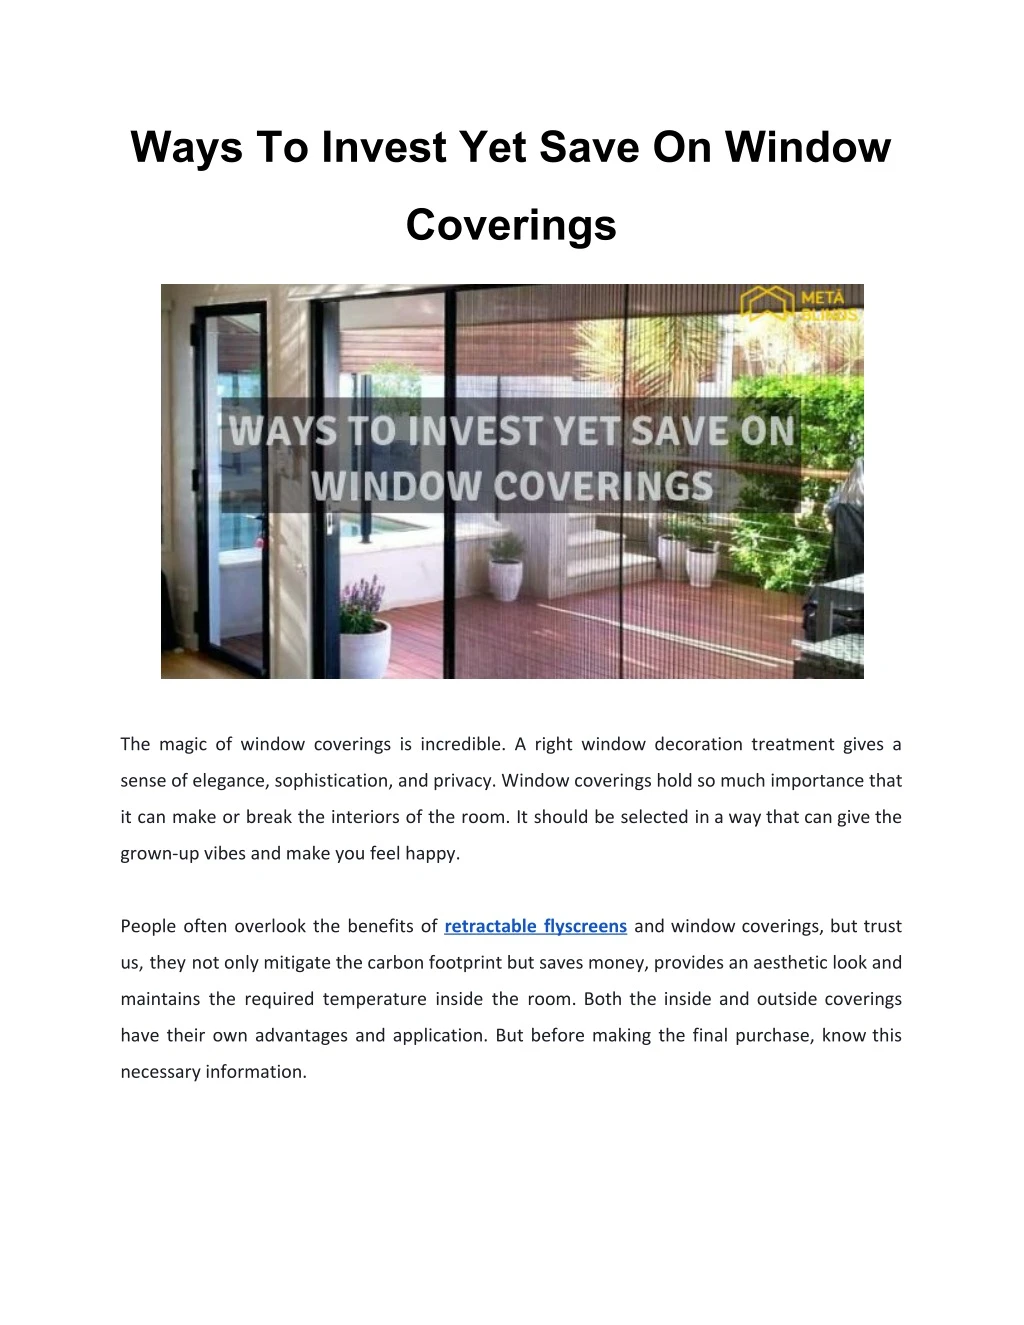 ways to invest yet save on window